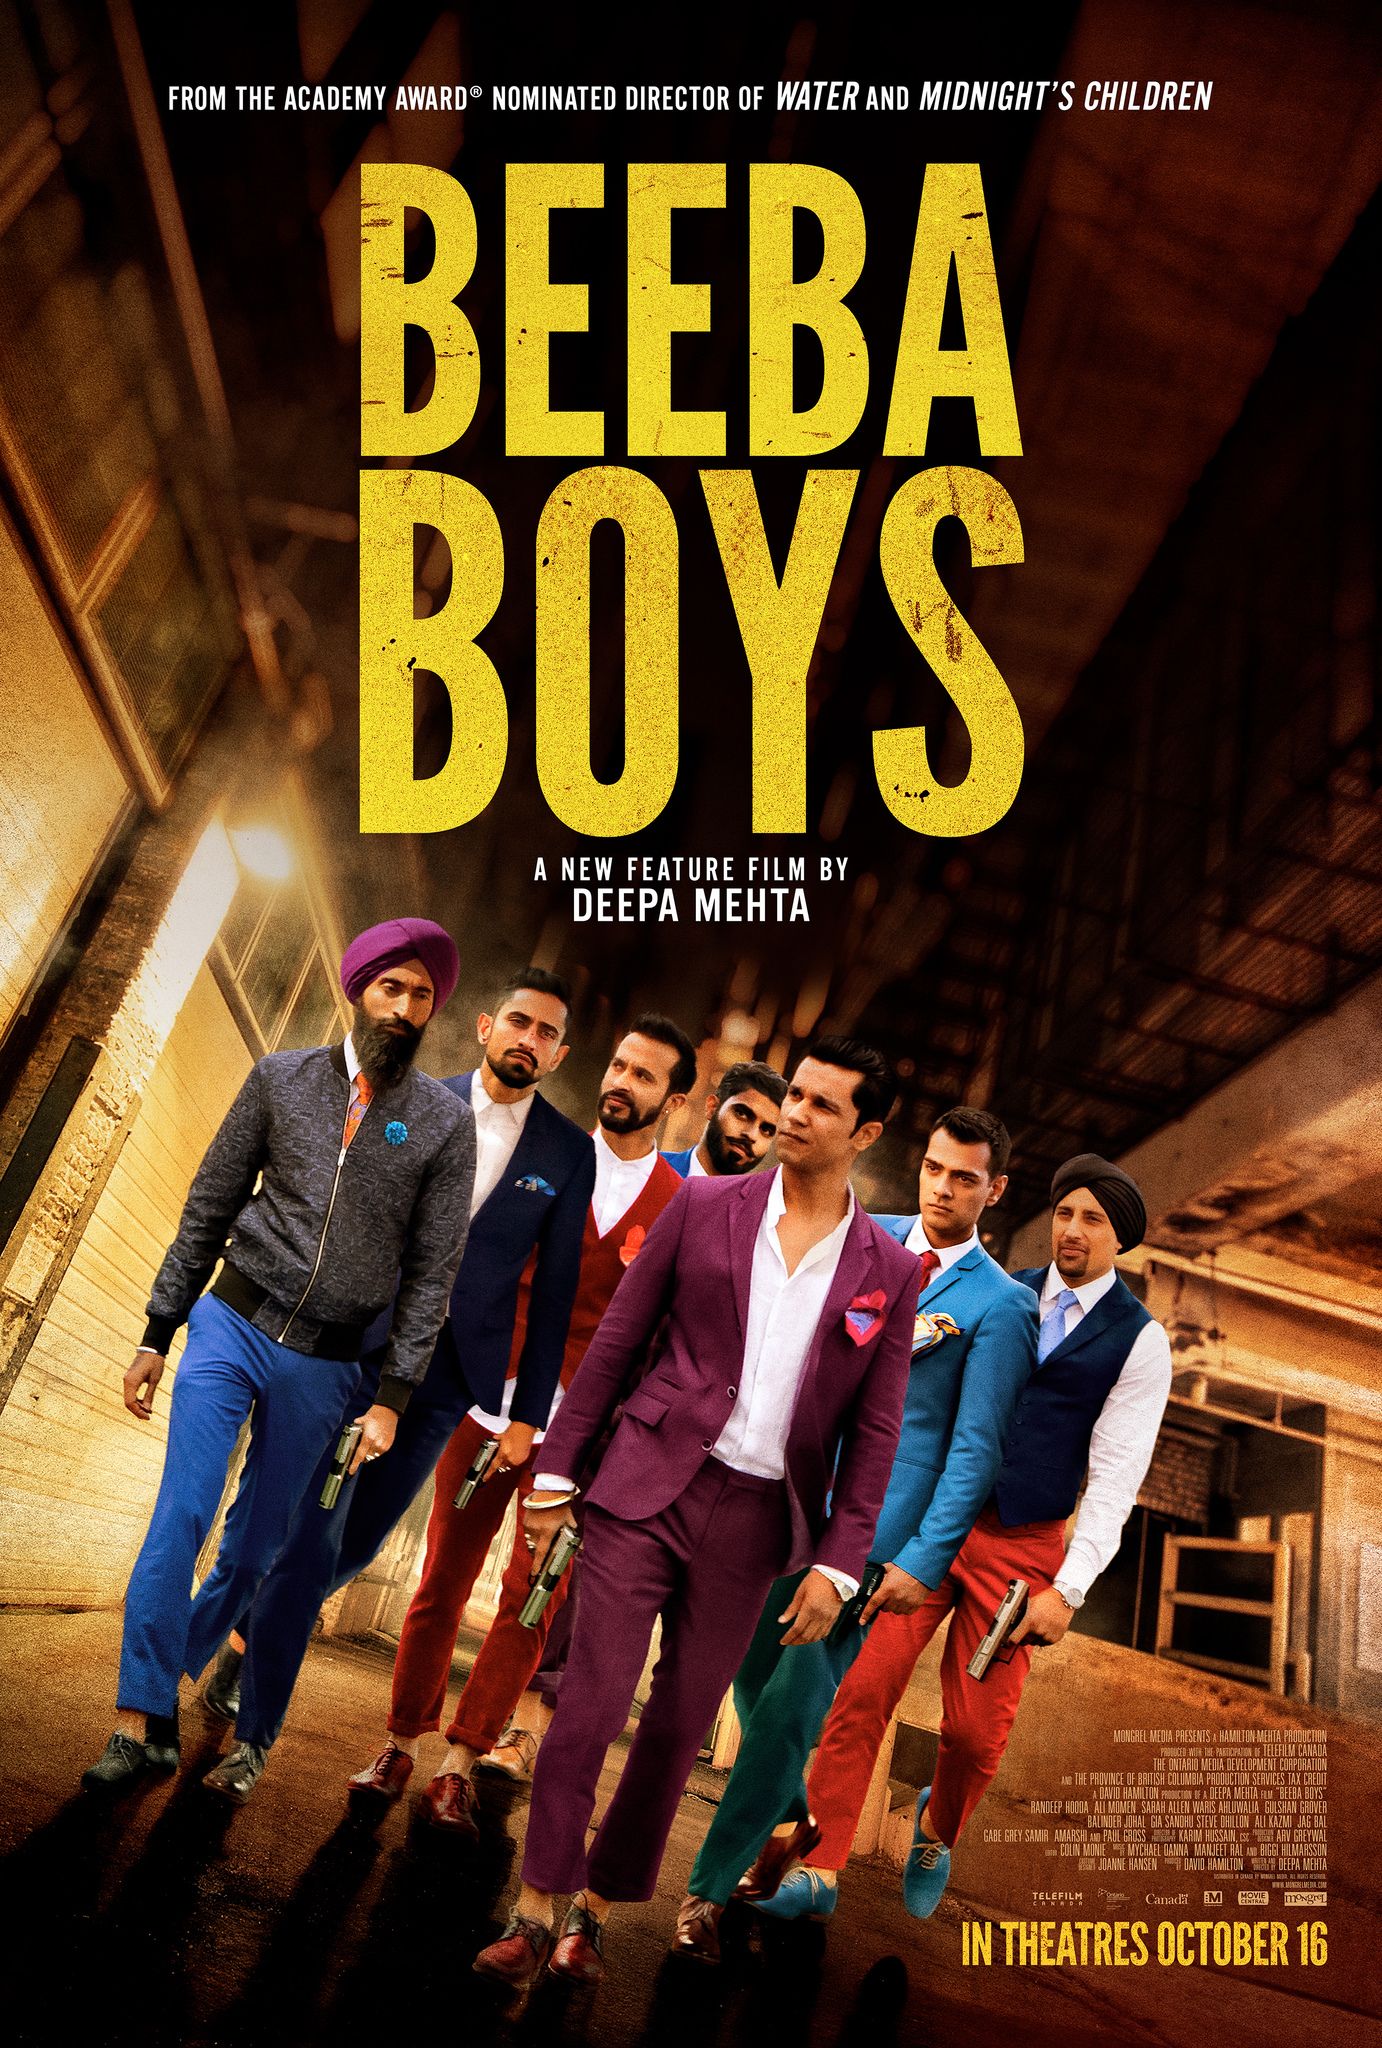 Beeba Boys (2015) Hindi Dubbed BluRay download full movie